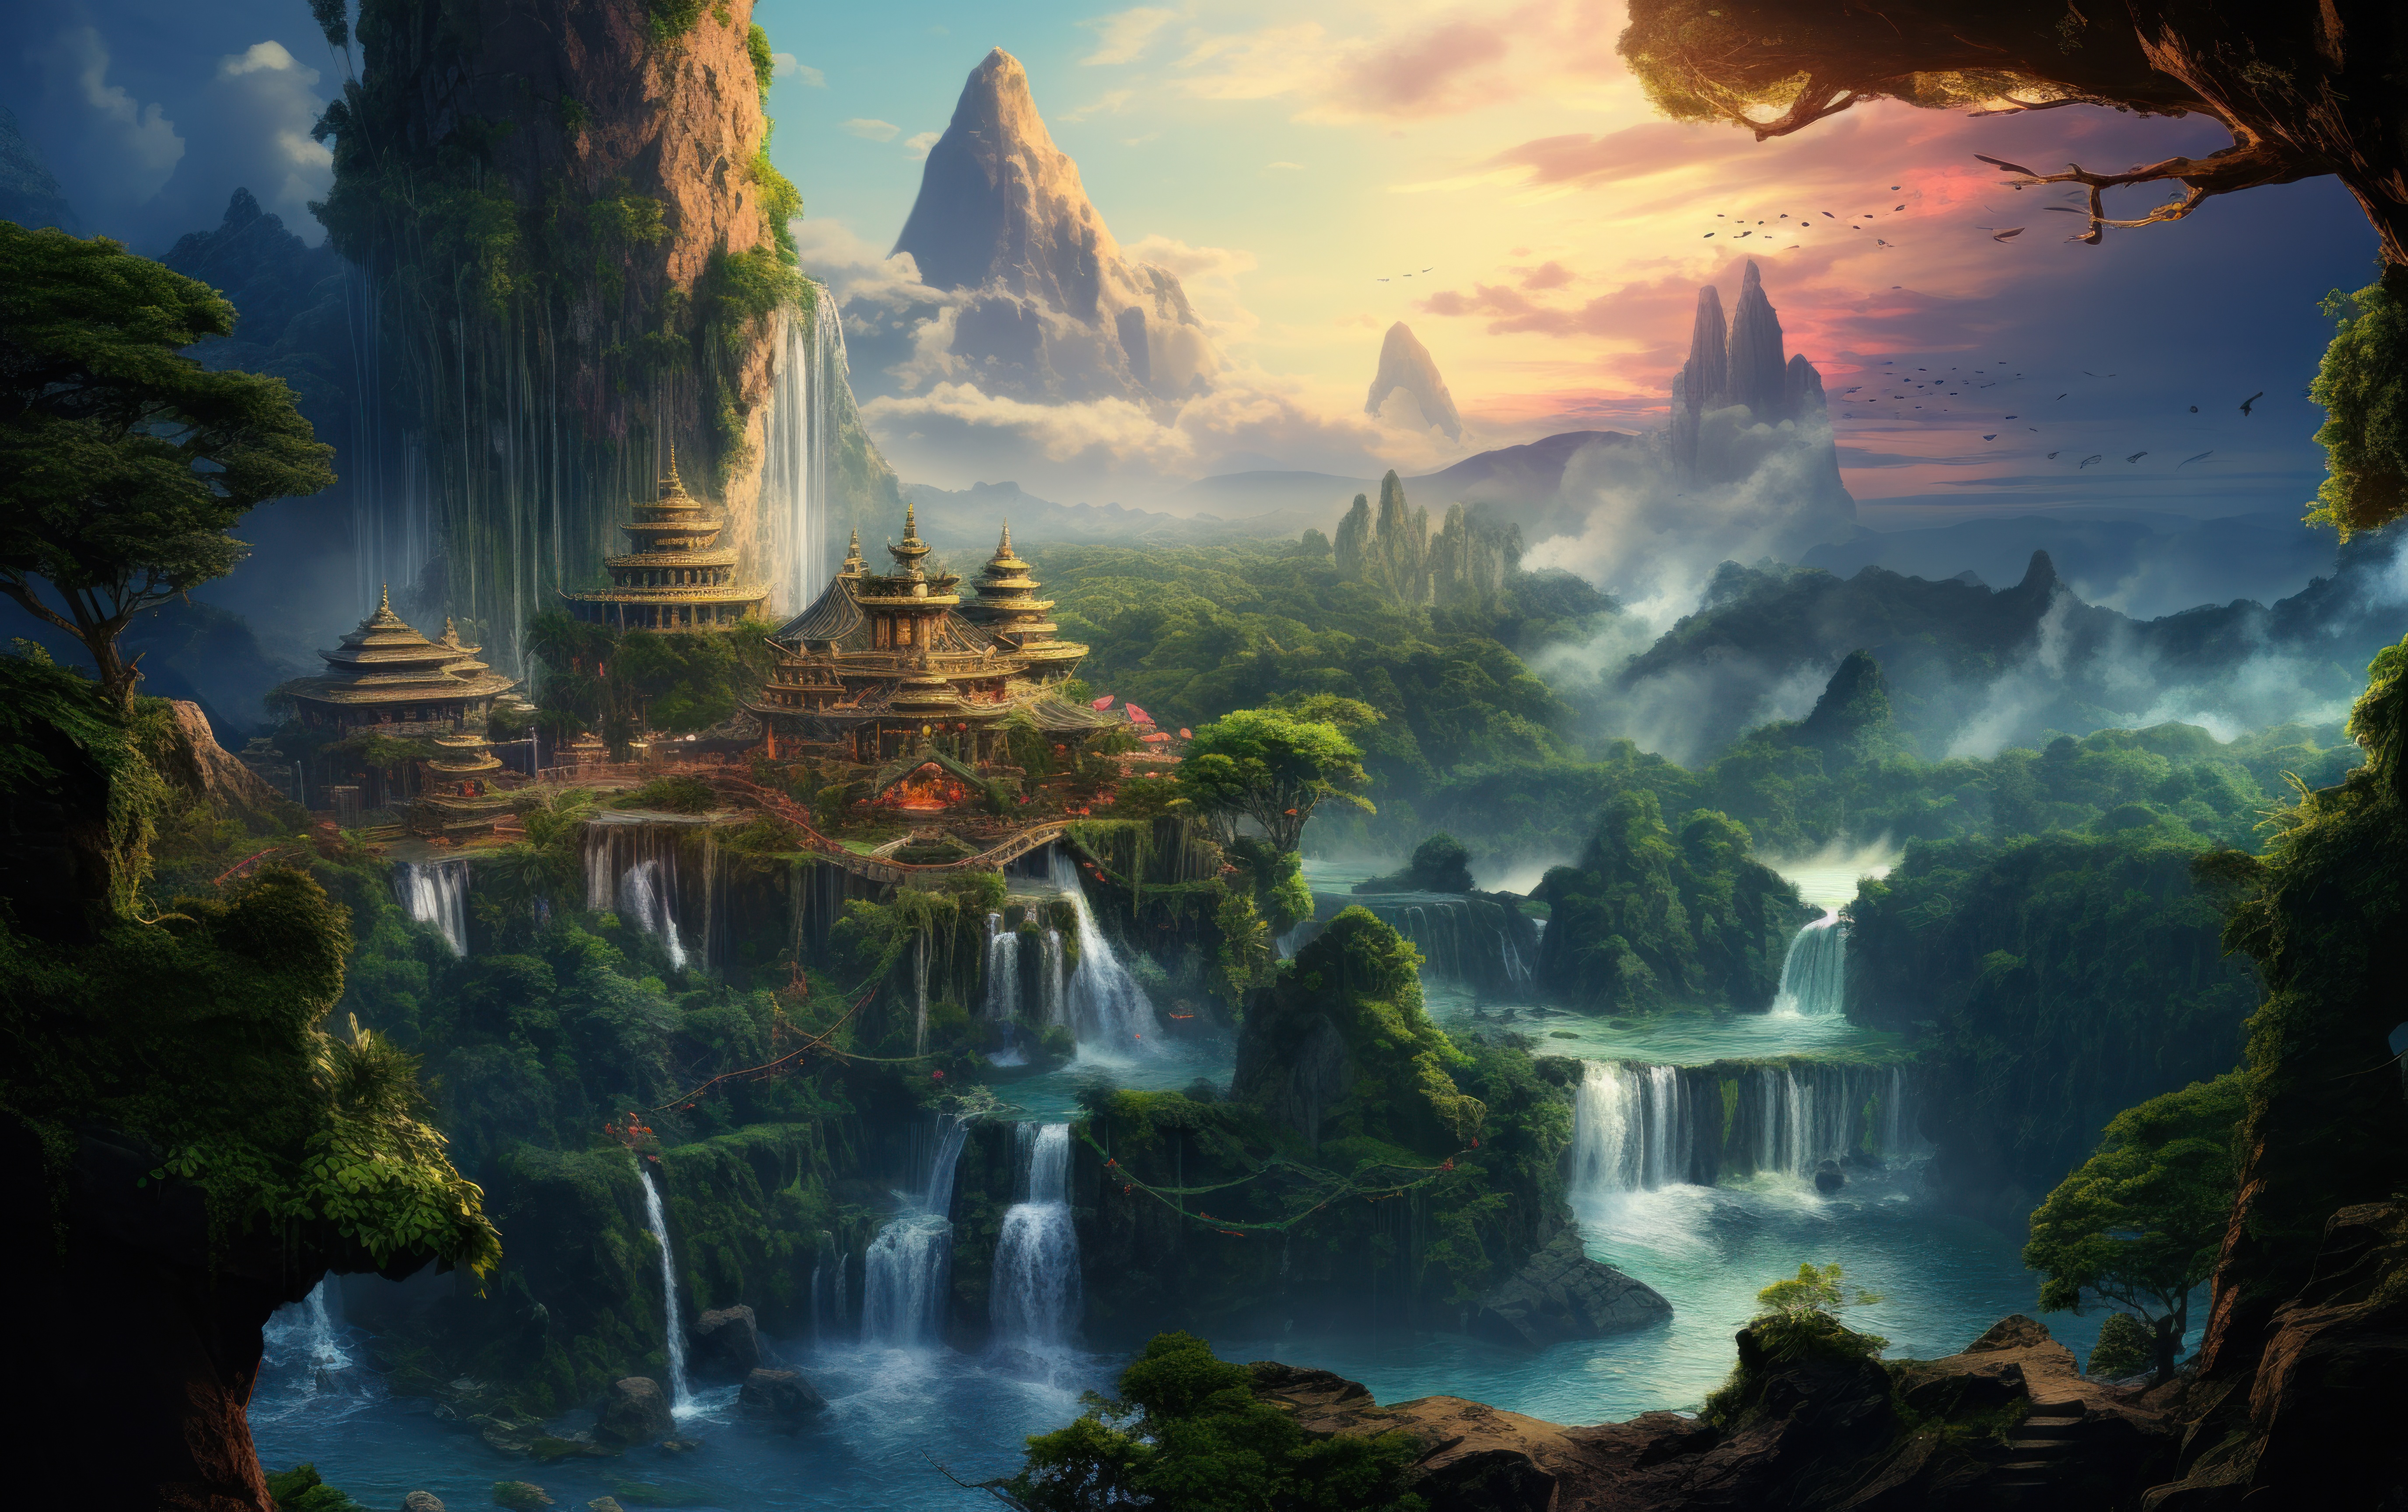 Fantasy Landscape Theme for Windows 10